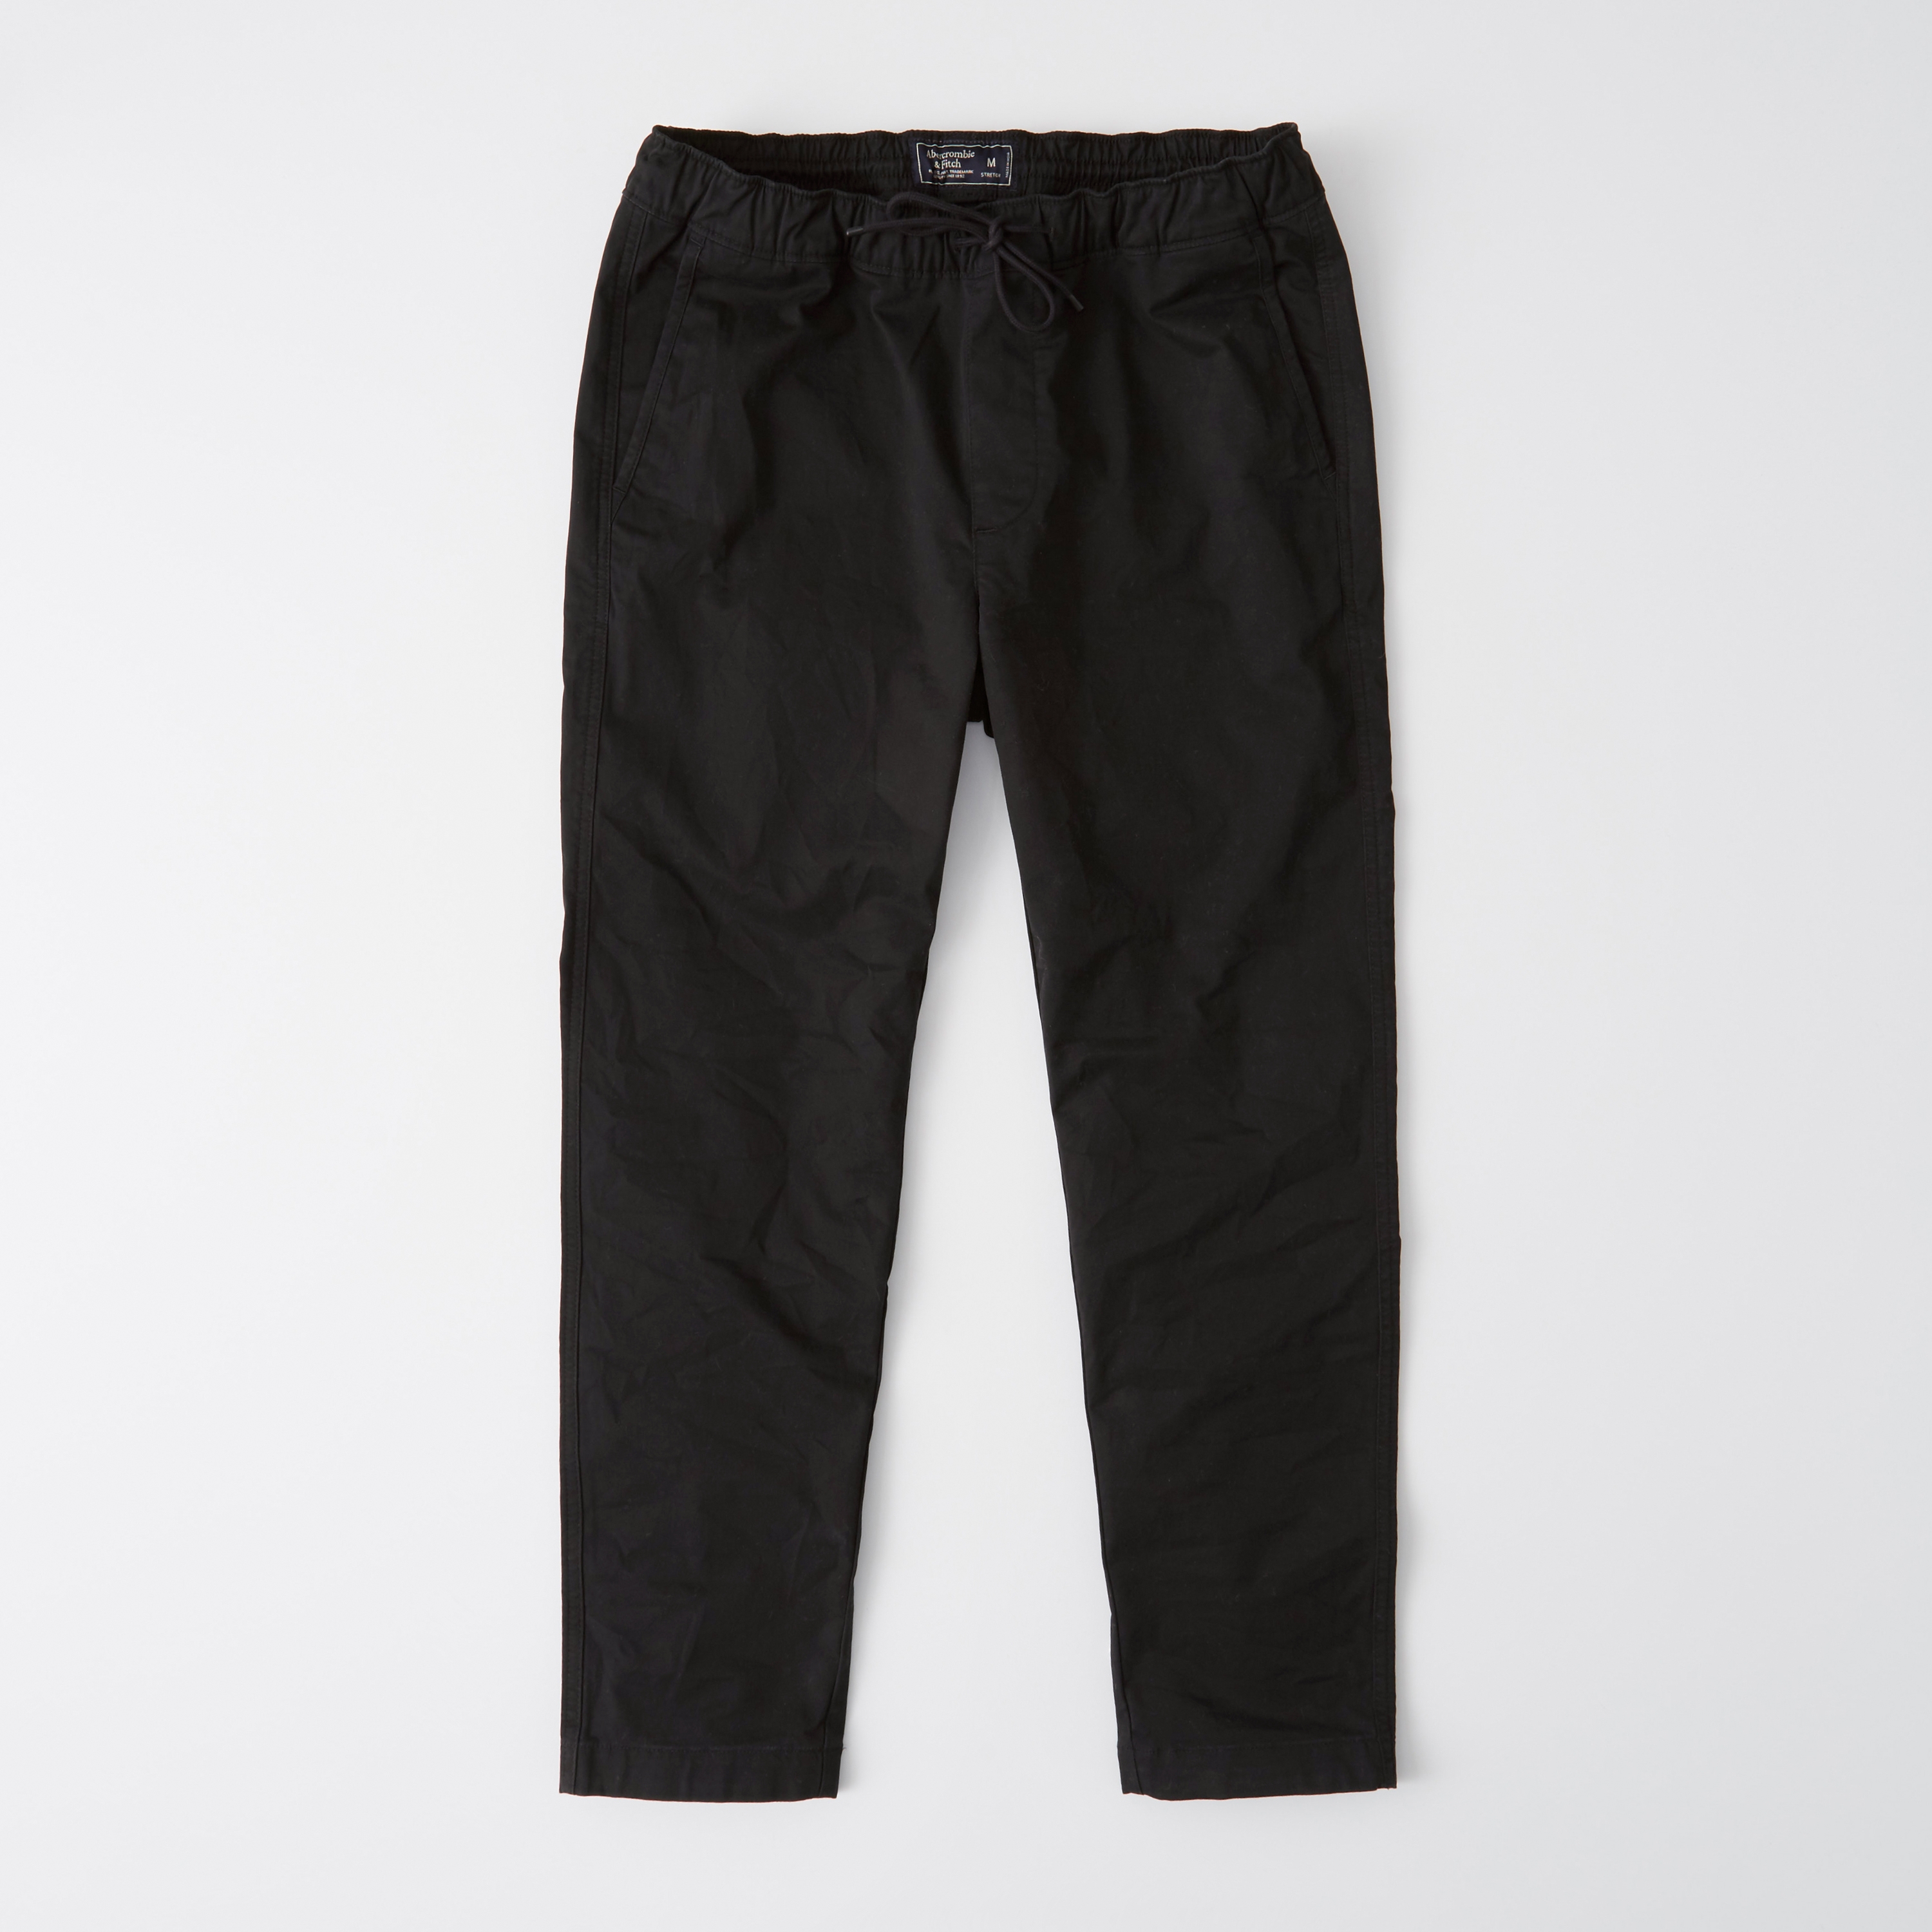 abercrombie black pants